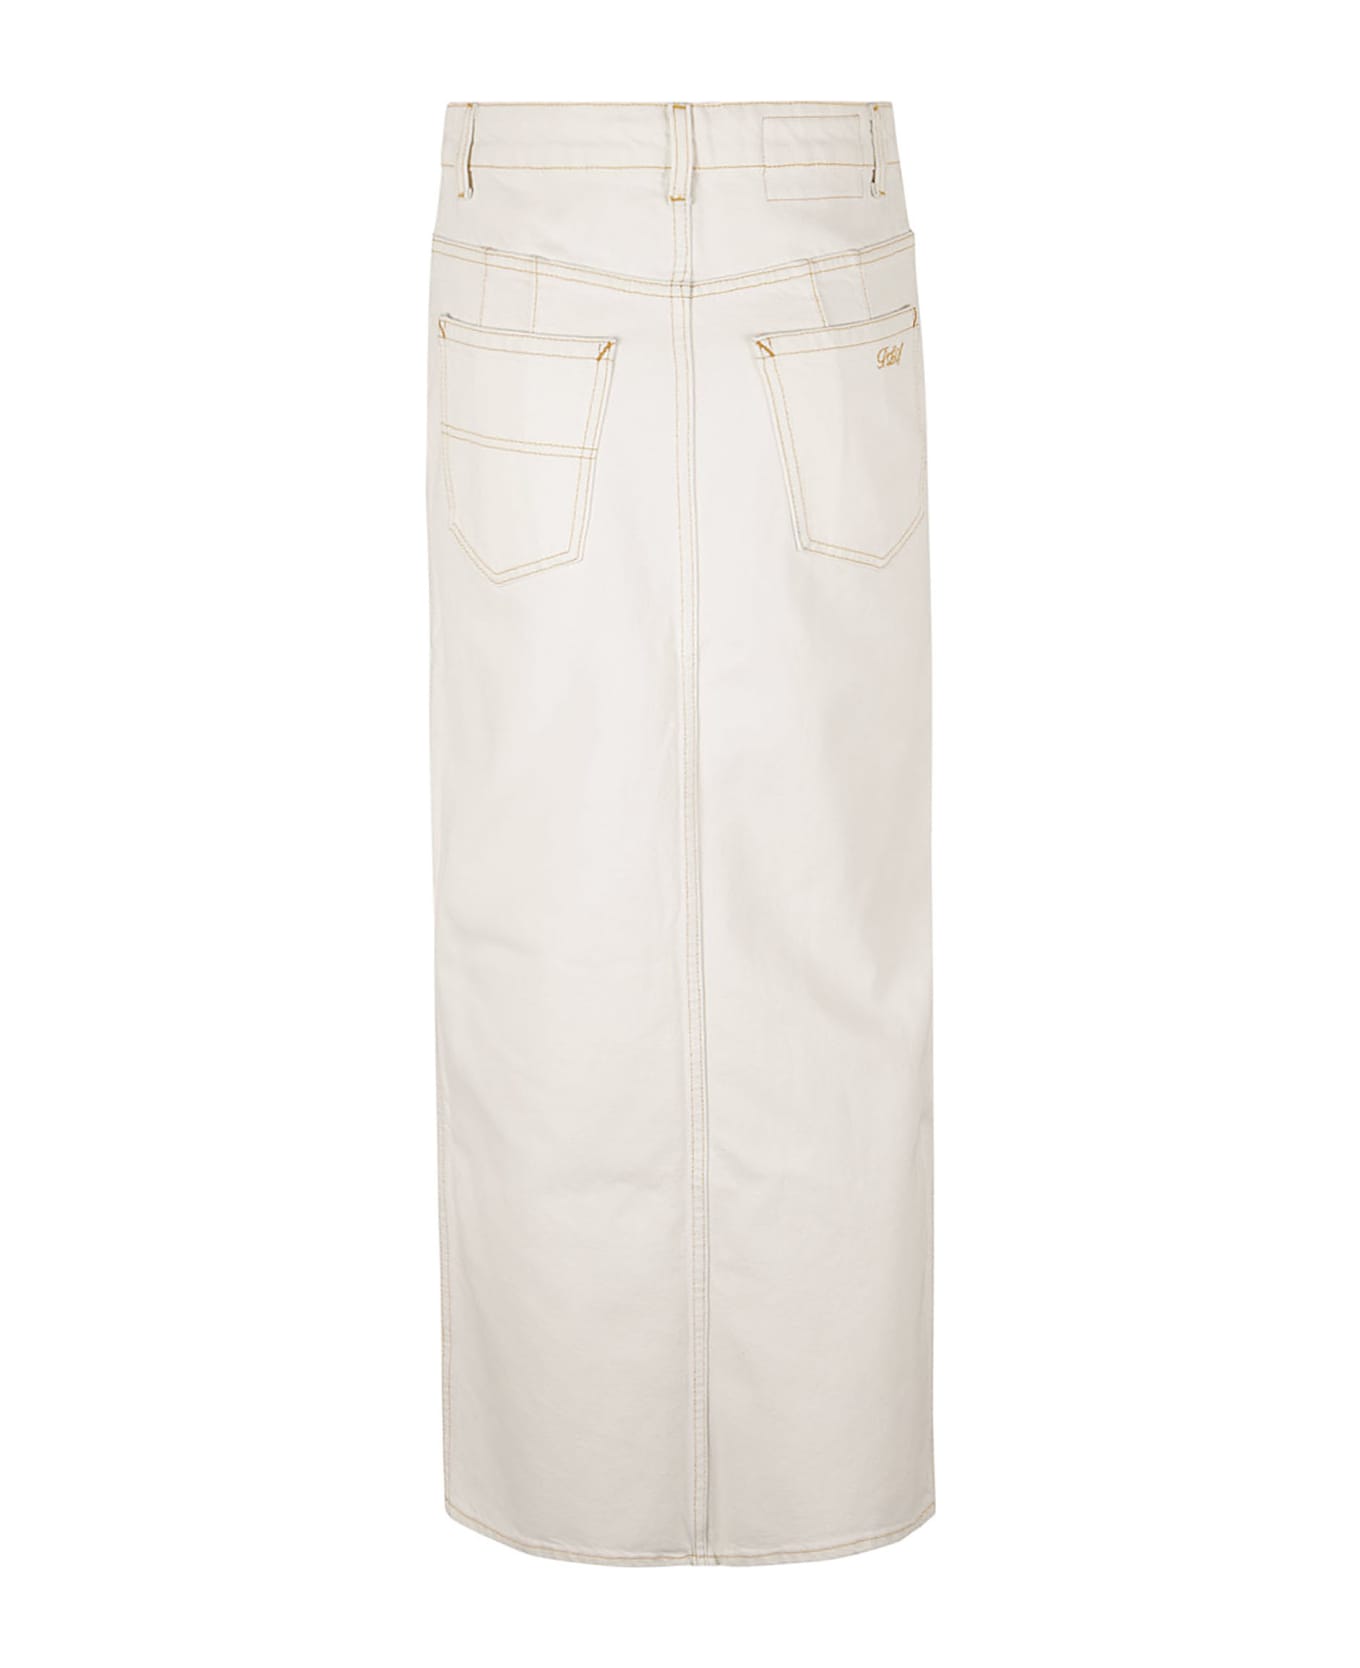 Philosophy di Lorenzo Serafini Front Slit 5 Pockets Denim Skirt - Bianco